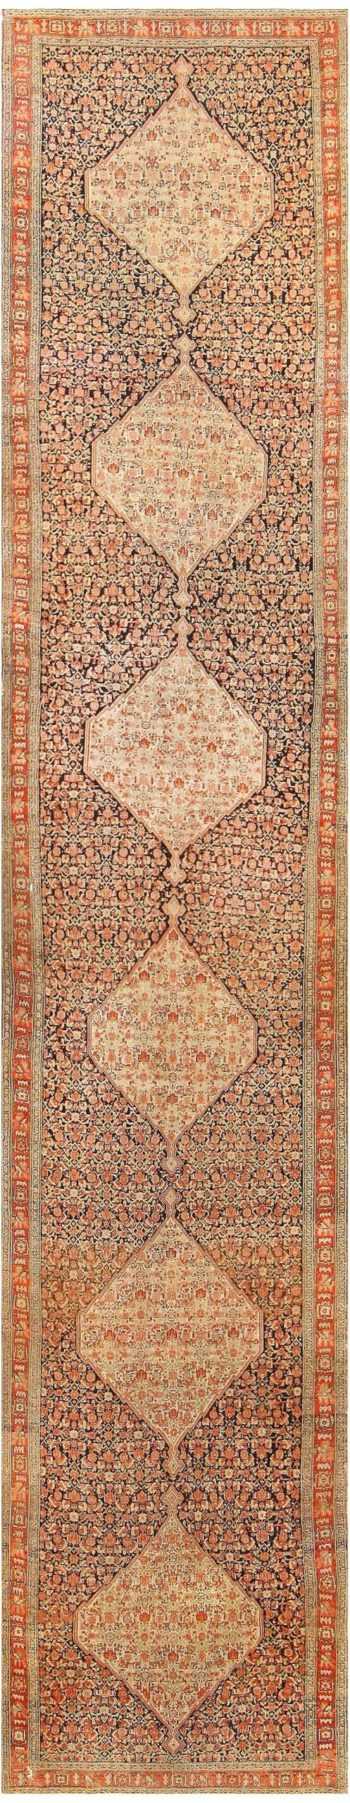 Antique Persian Senneh Runner Rug 48089 by Nazmiyal